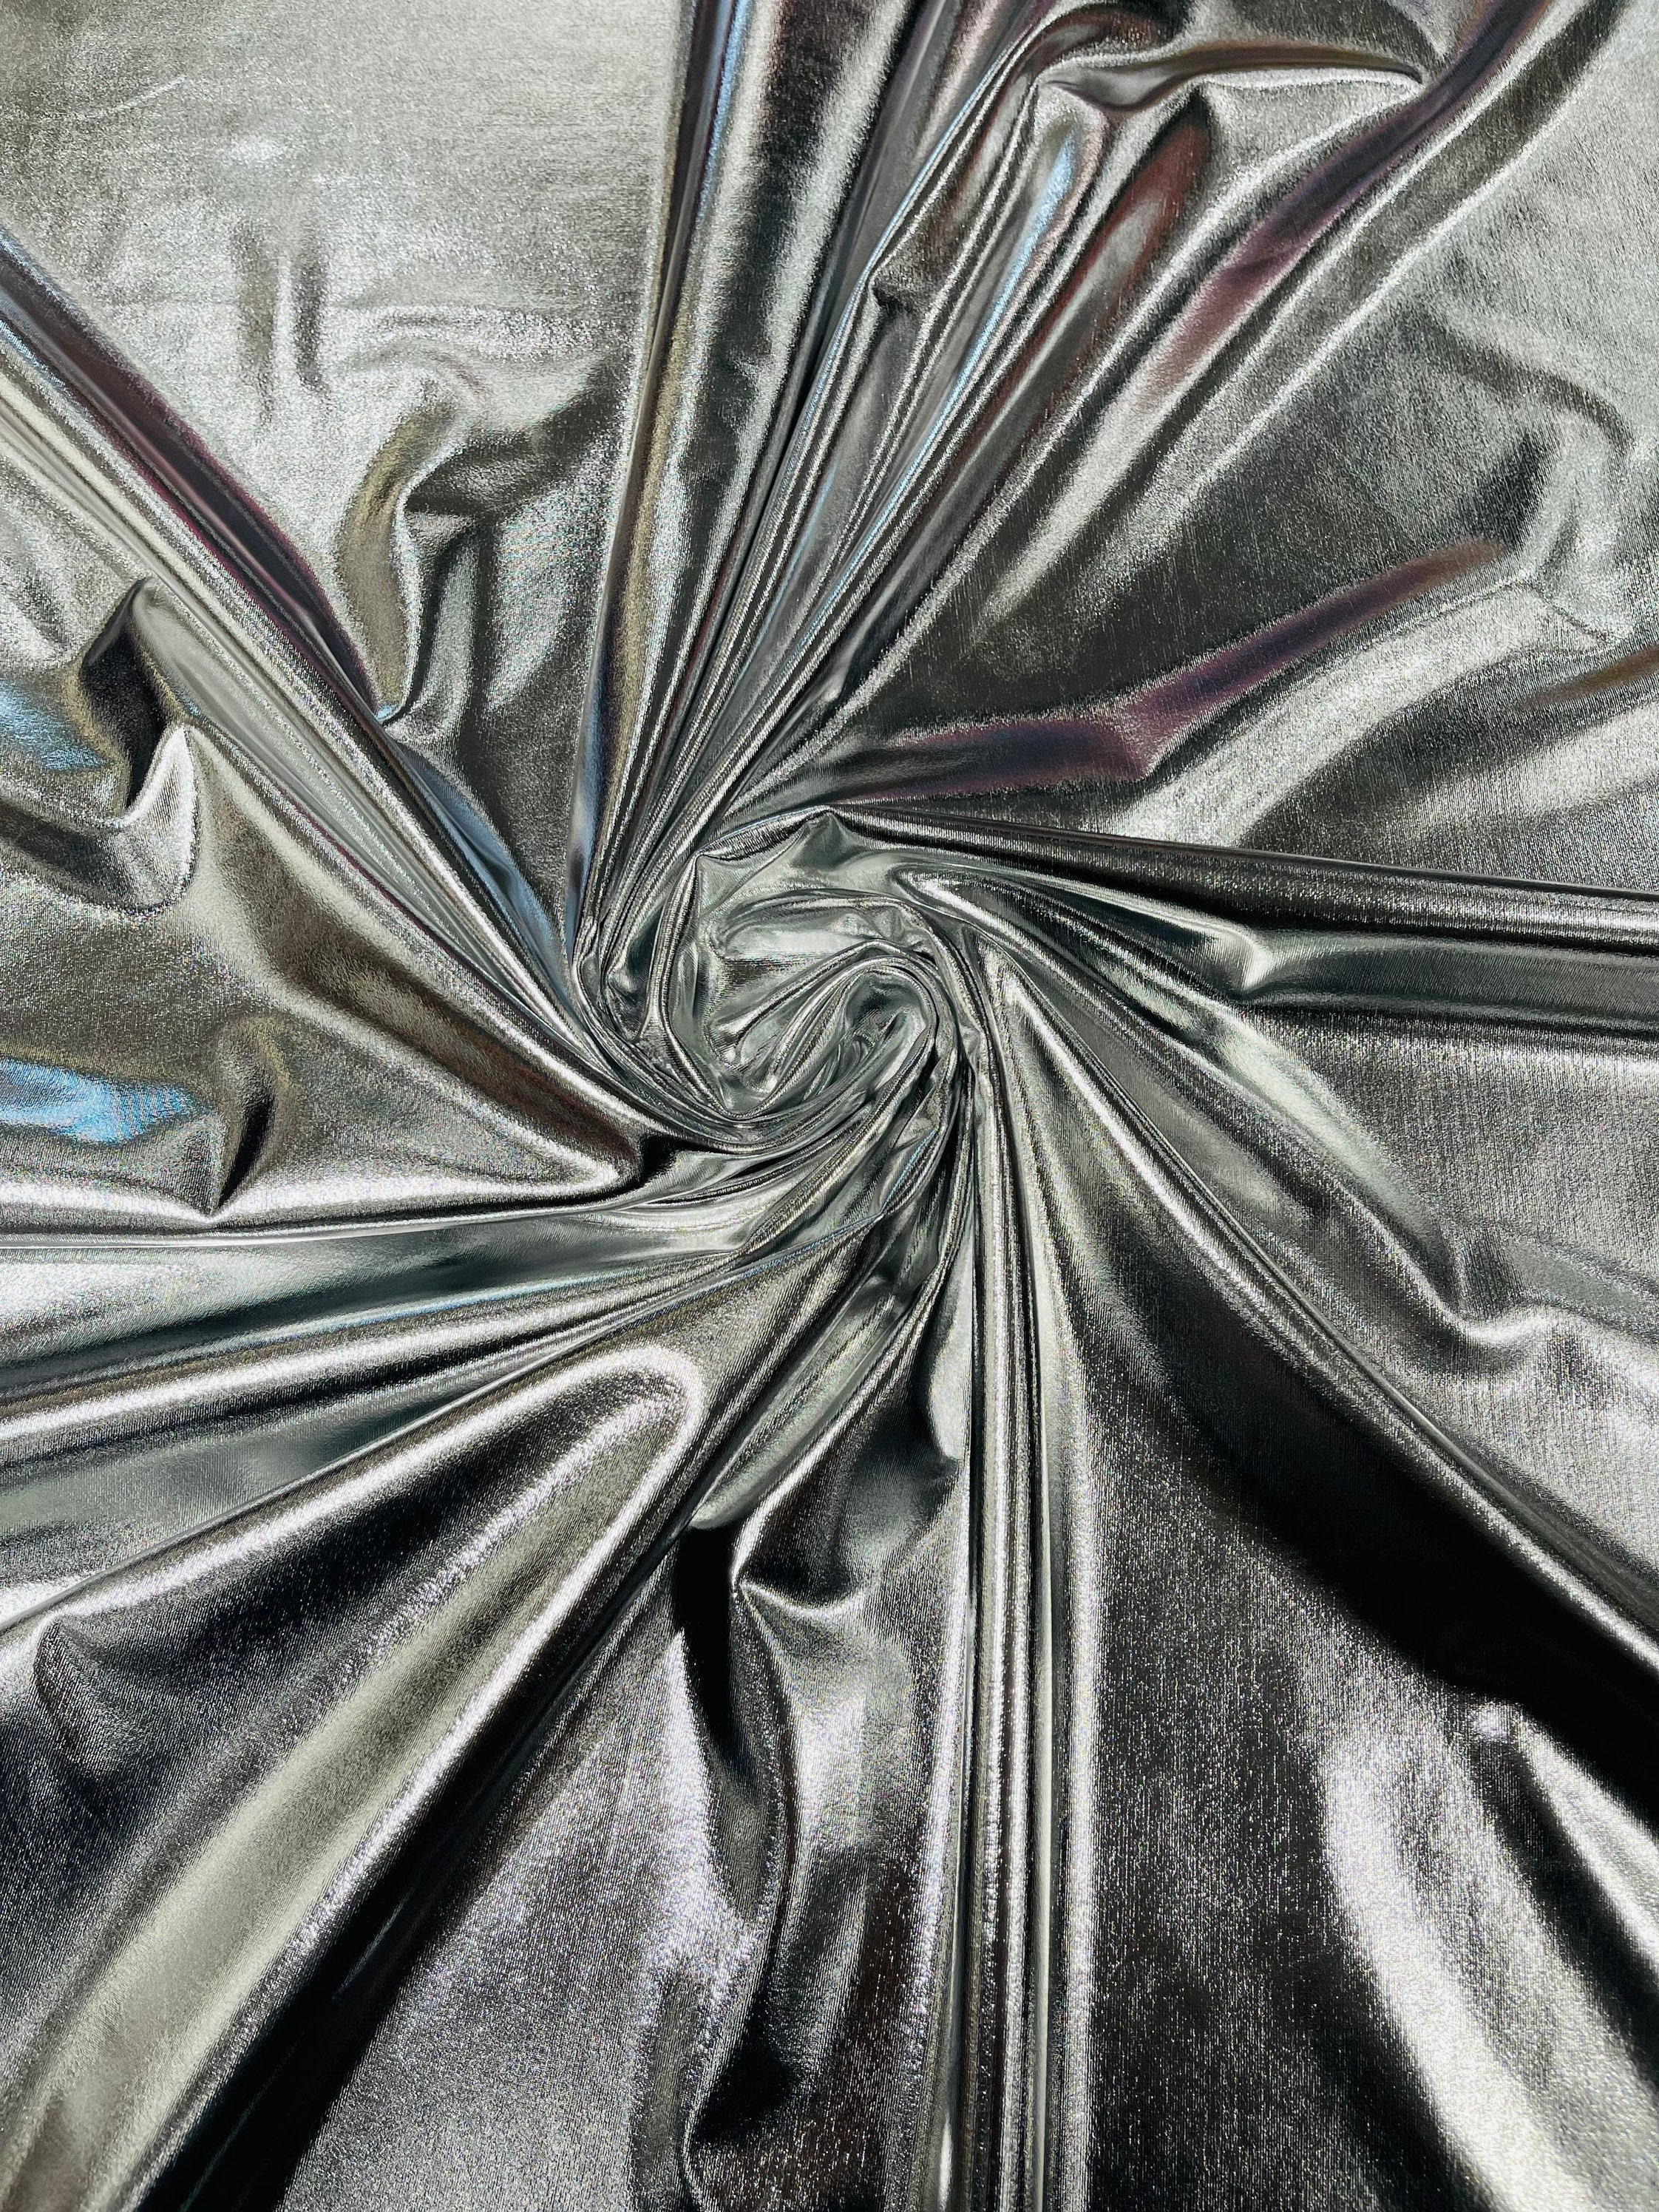 Silver Foil Metallic Spandex Fabric